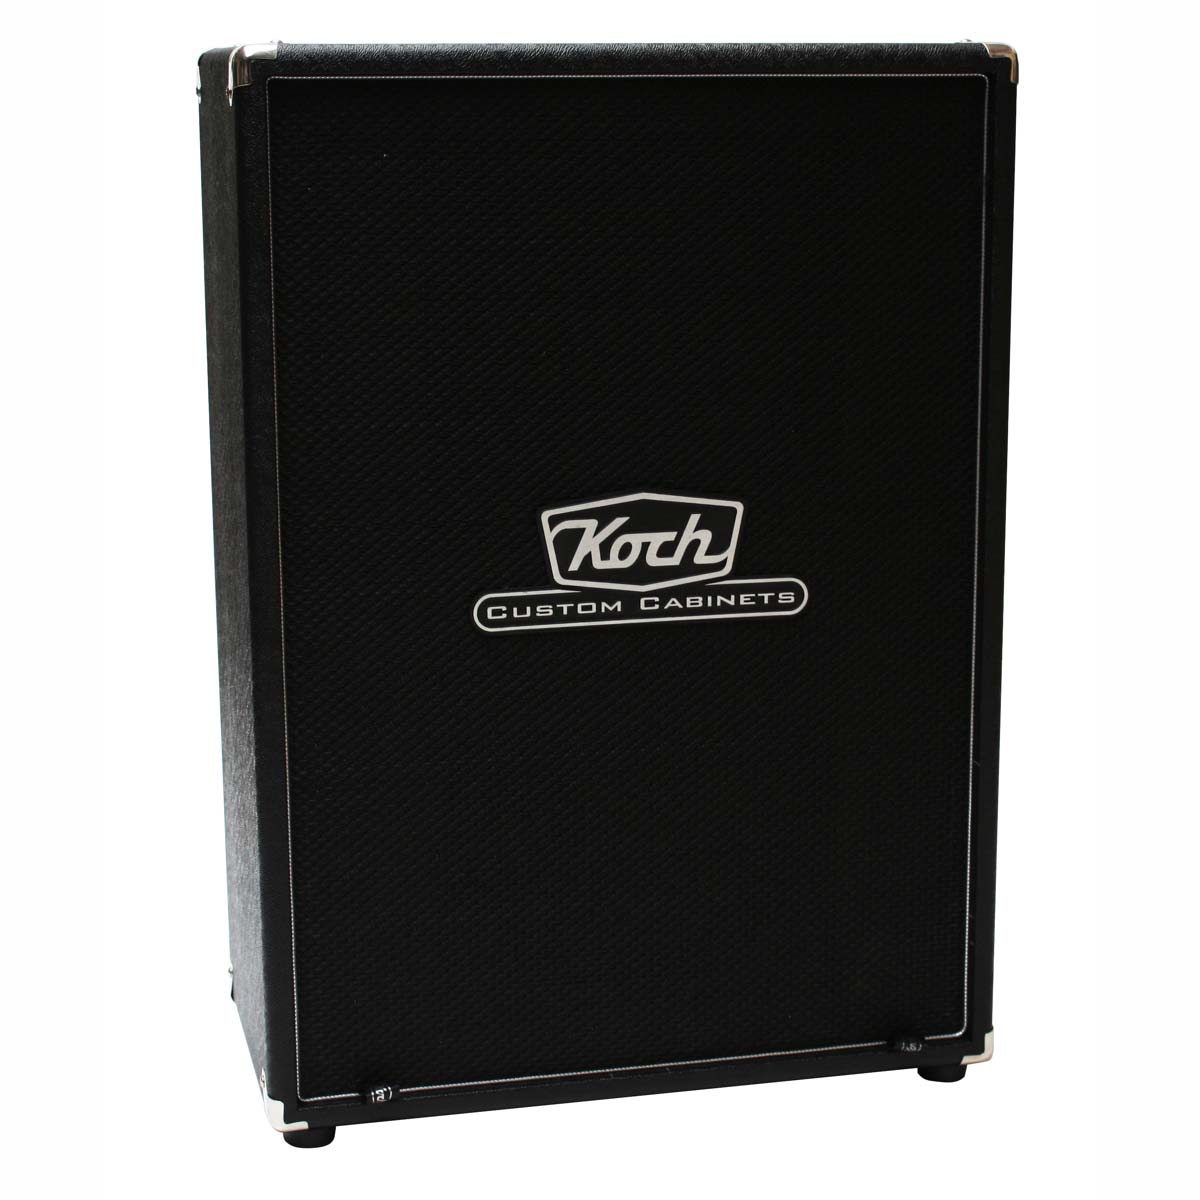 Bafle para guitarra Koch KCC-212 Vertical 2x12" Black